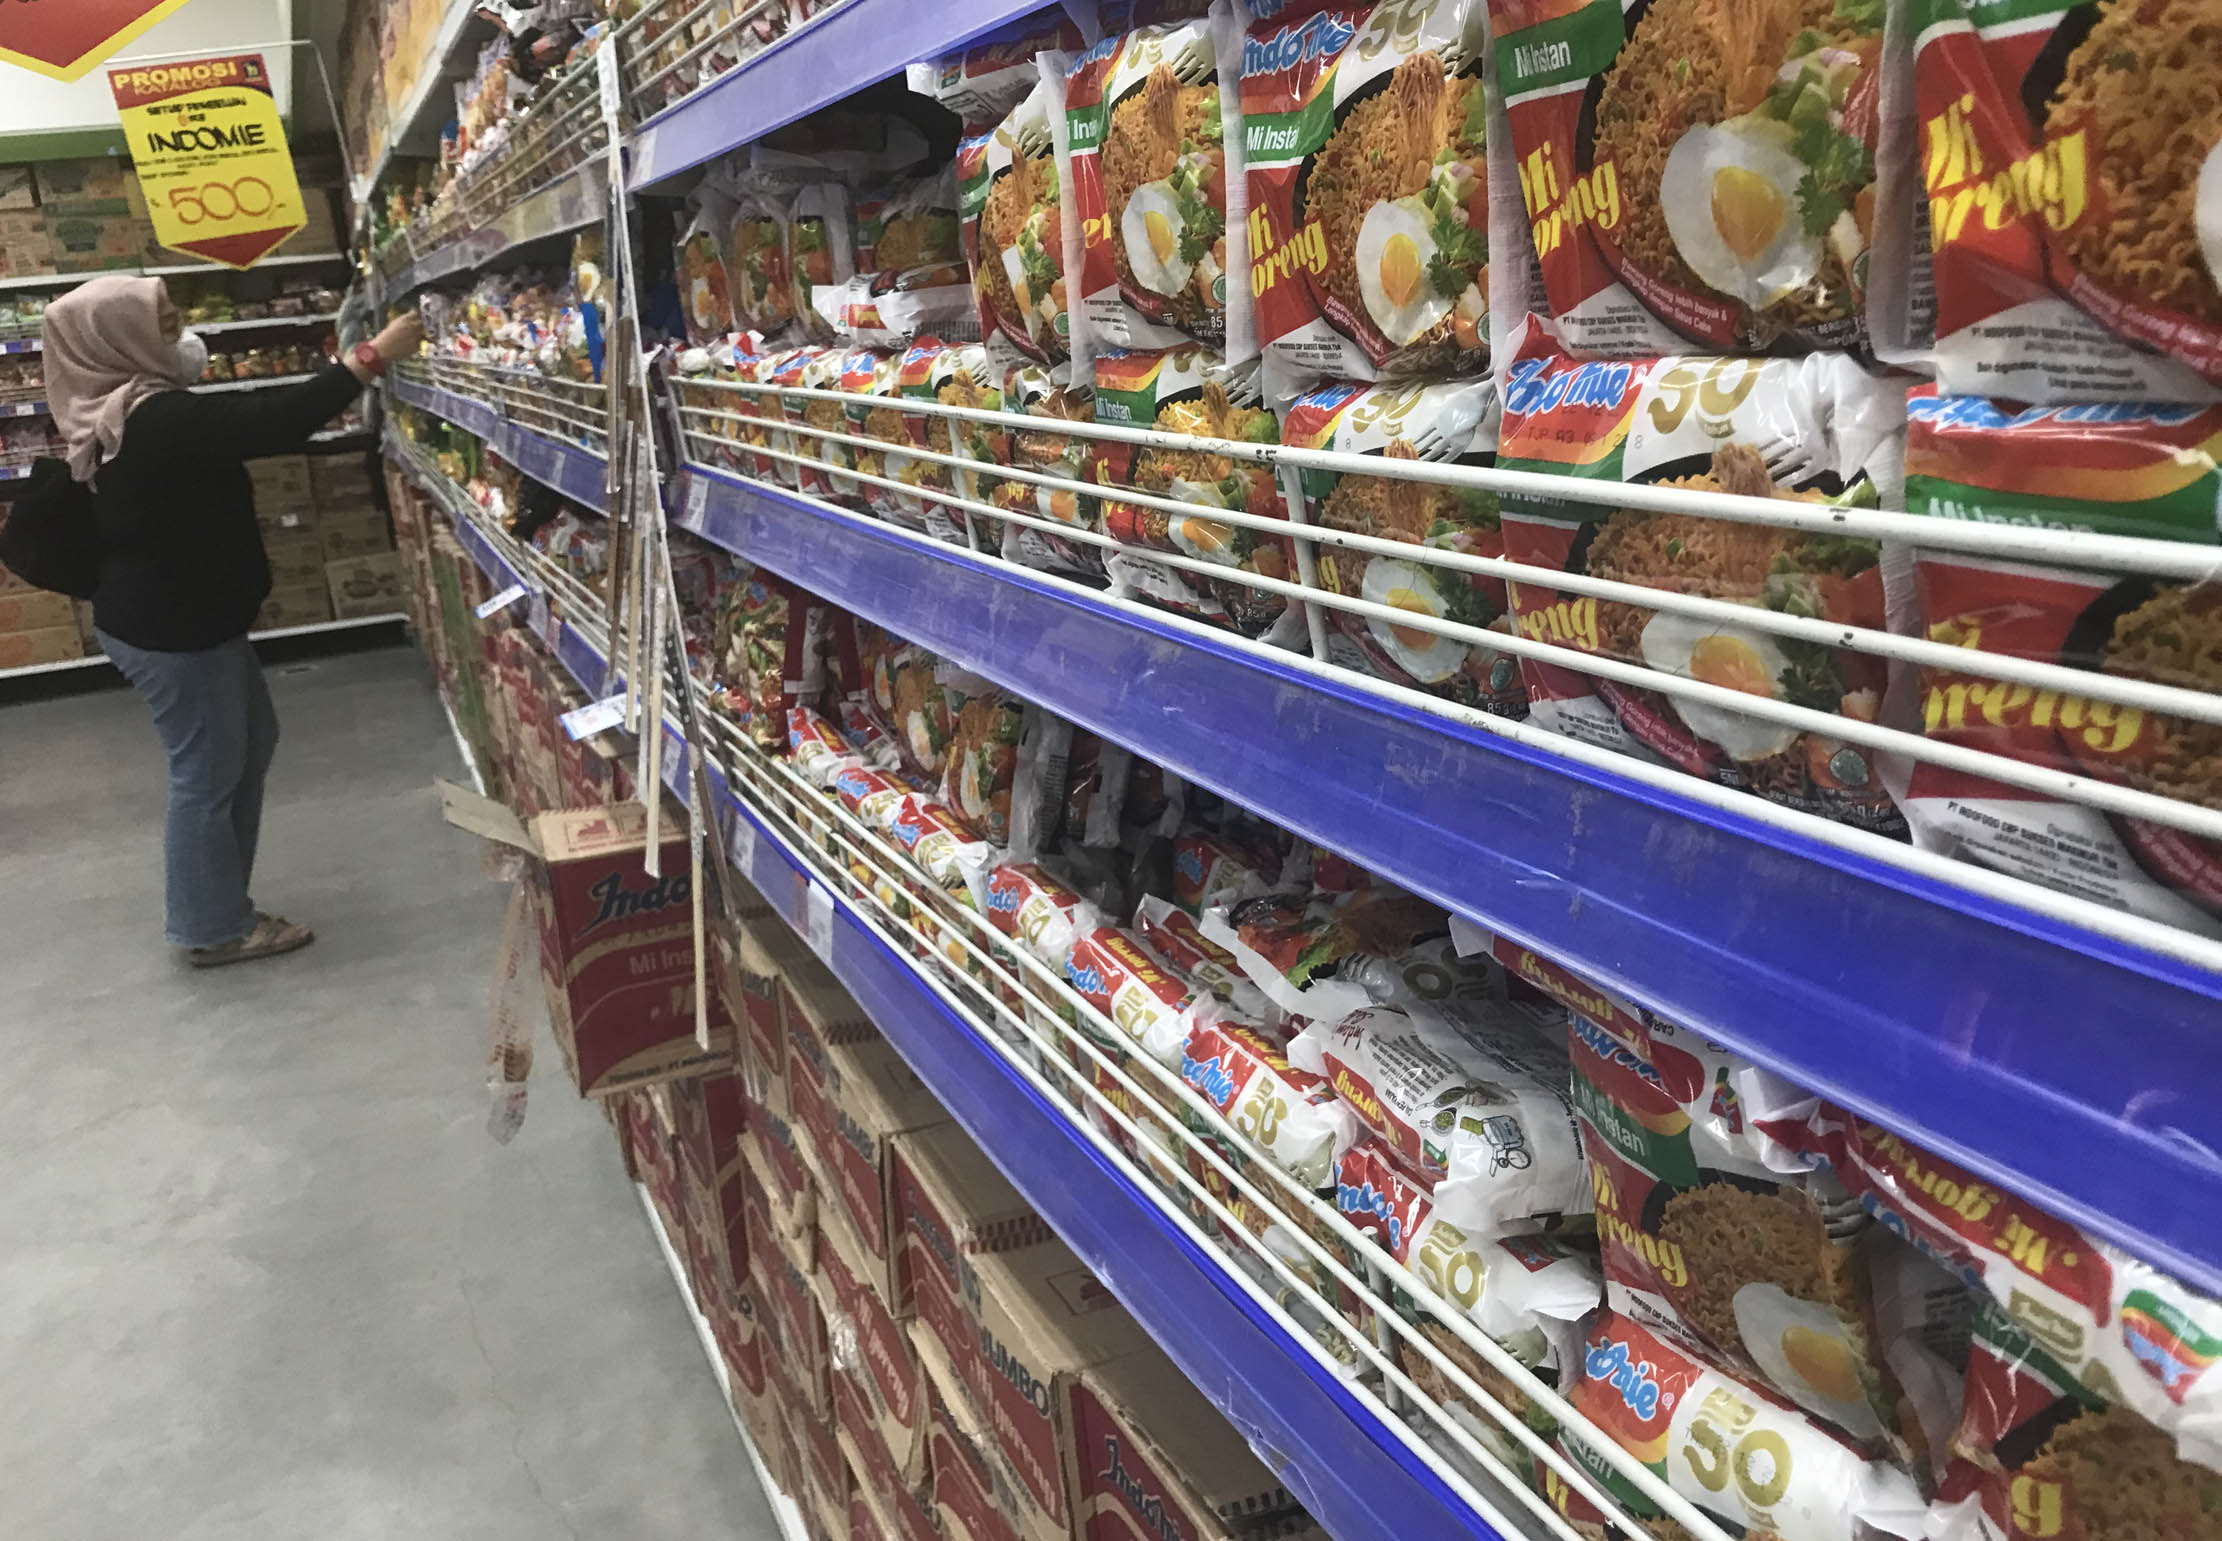 Seorang pembeli tengah memilih sejumlah produk berbahan baku gandum seperti roti dan mie. Pelarangan ekspor dari India sebagai negara produsen gandum terbesar berimbas tingginya harga bahan baku gandum, Senin 30 Mei 2022. Foto : Panji Asmoro/TrenAsia